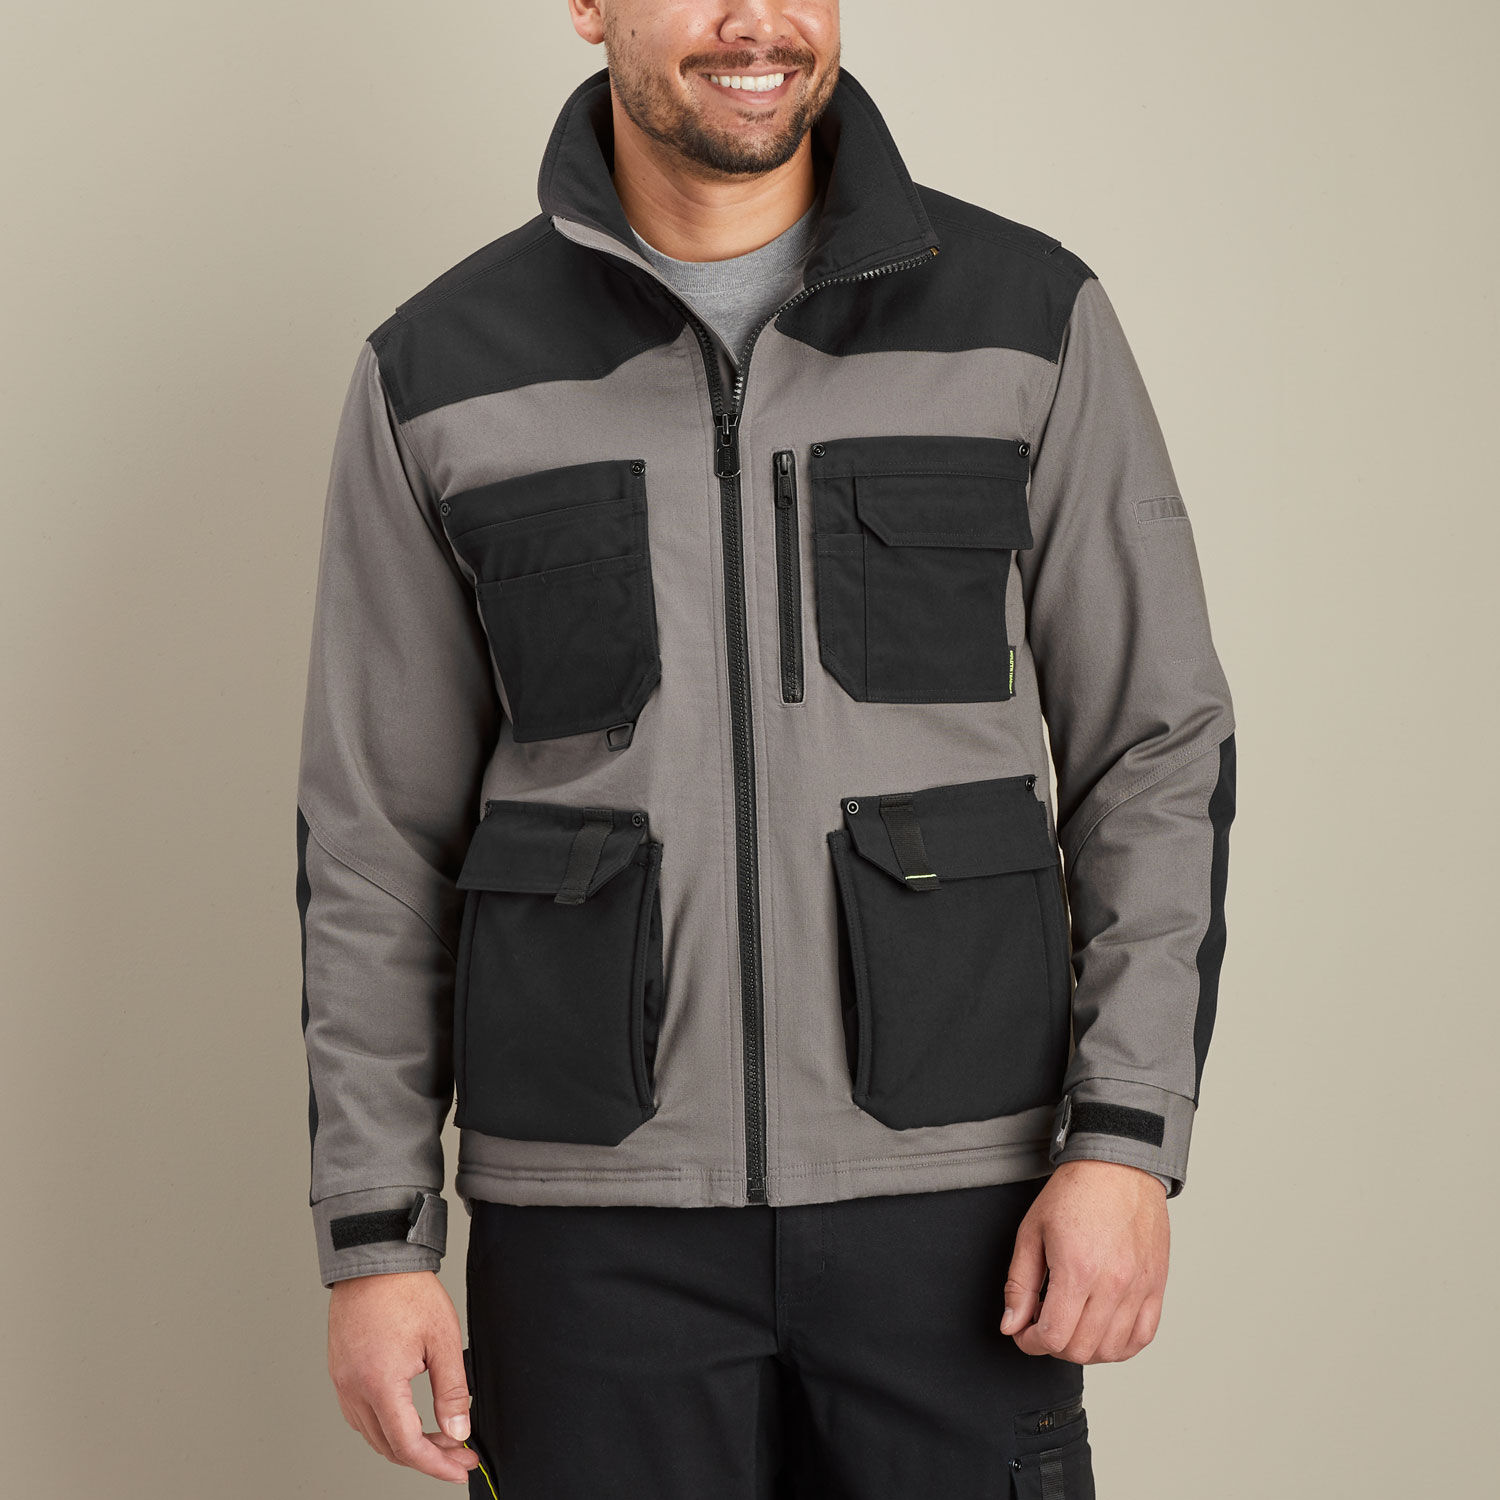 Men's TradeTek Work Jacket | Duluth Trading Company